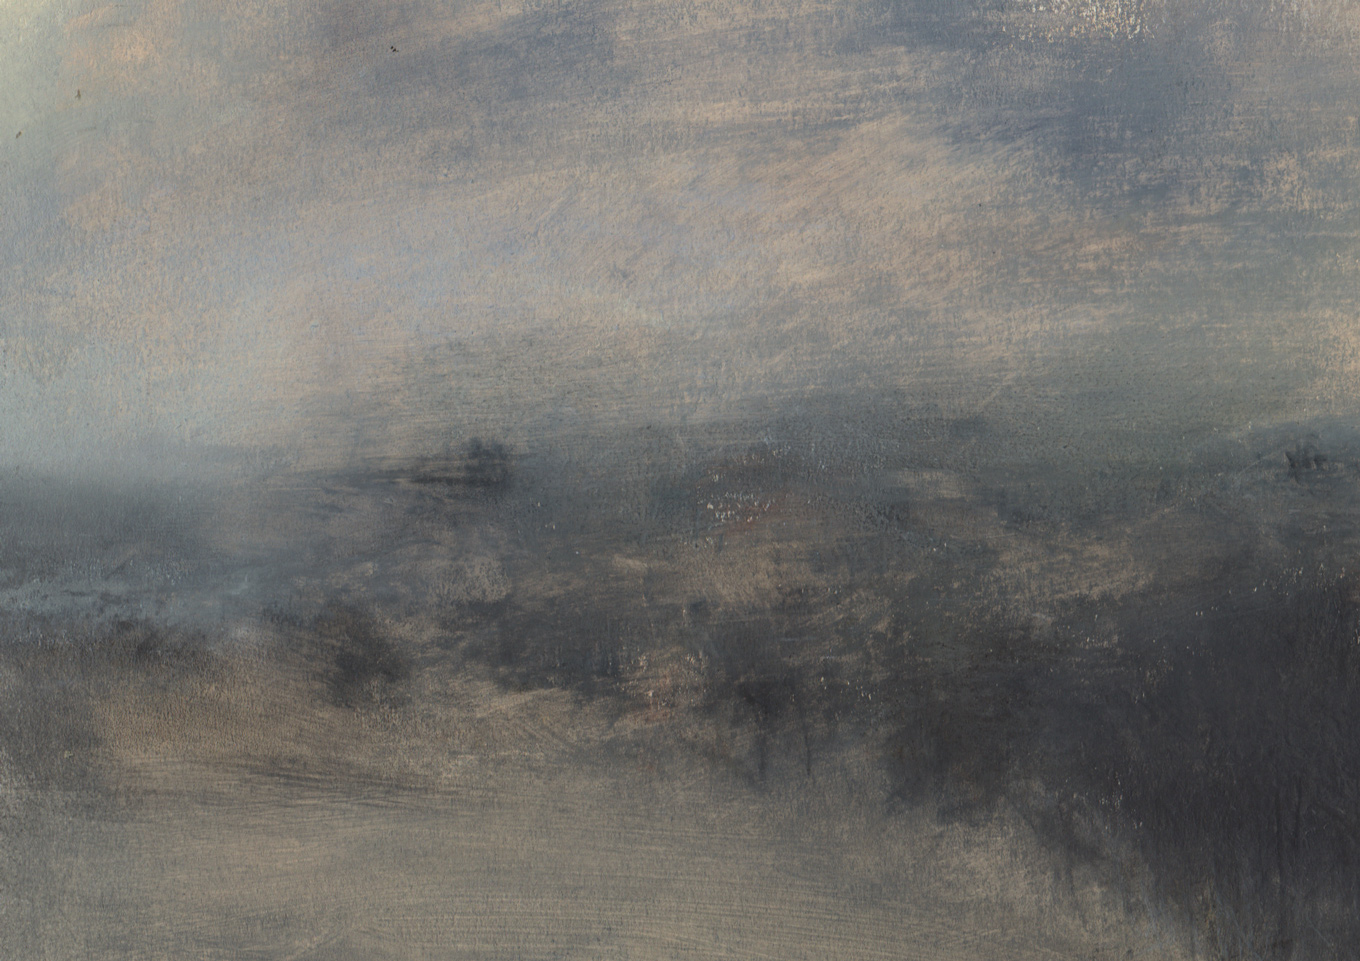 Nicholas Herbert, British Artist - Landscape L971, Sharpenhoe Series, From Markham Hill, The Chiltern Hills, contemporary mixed media painting